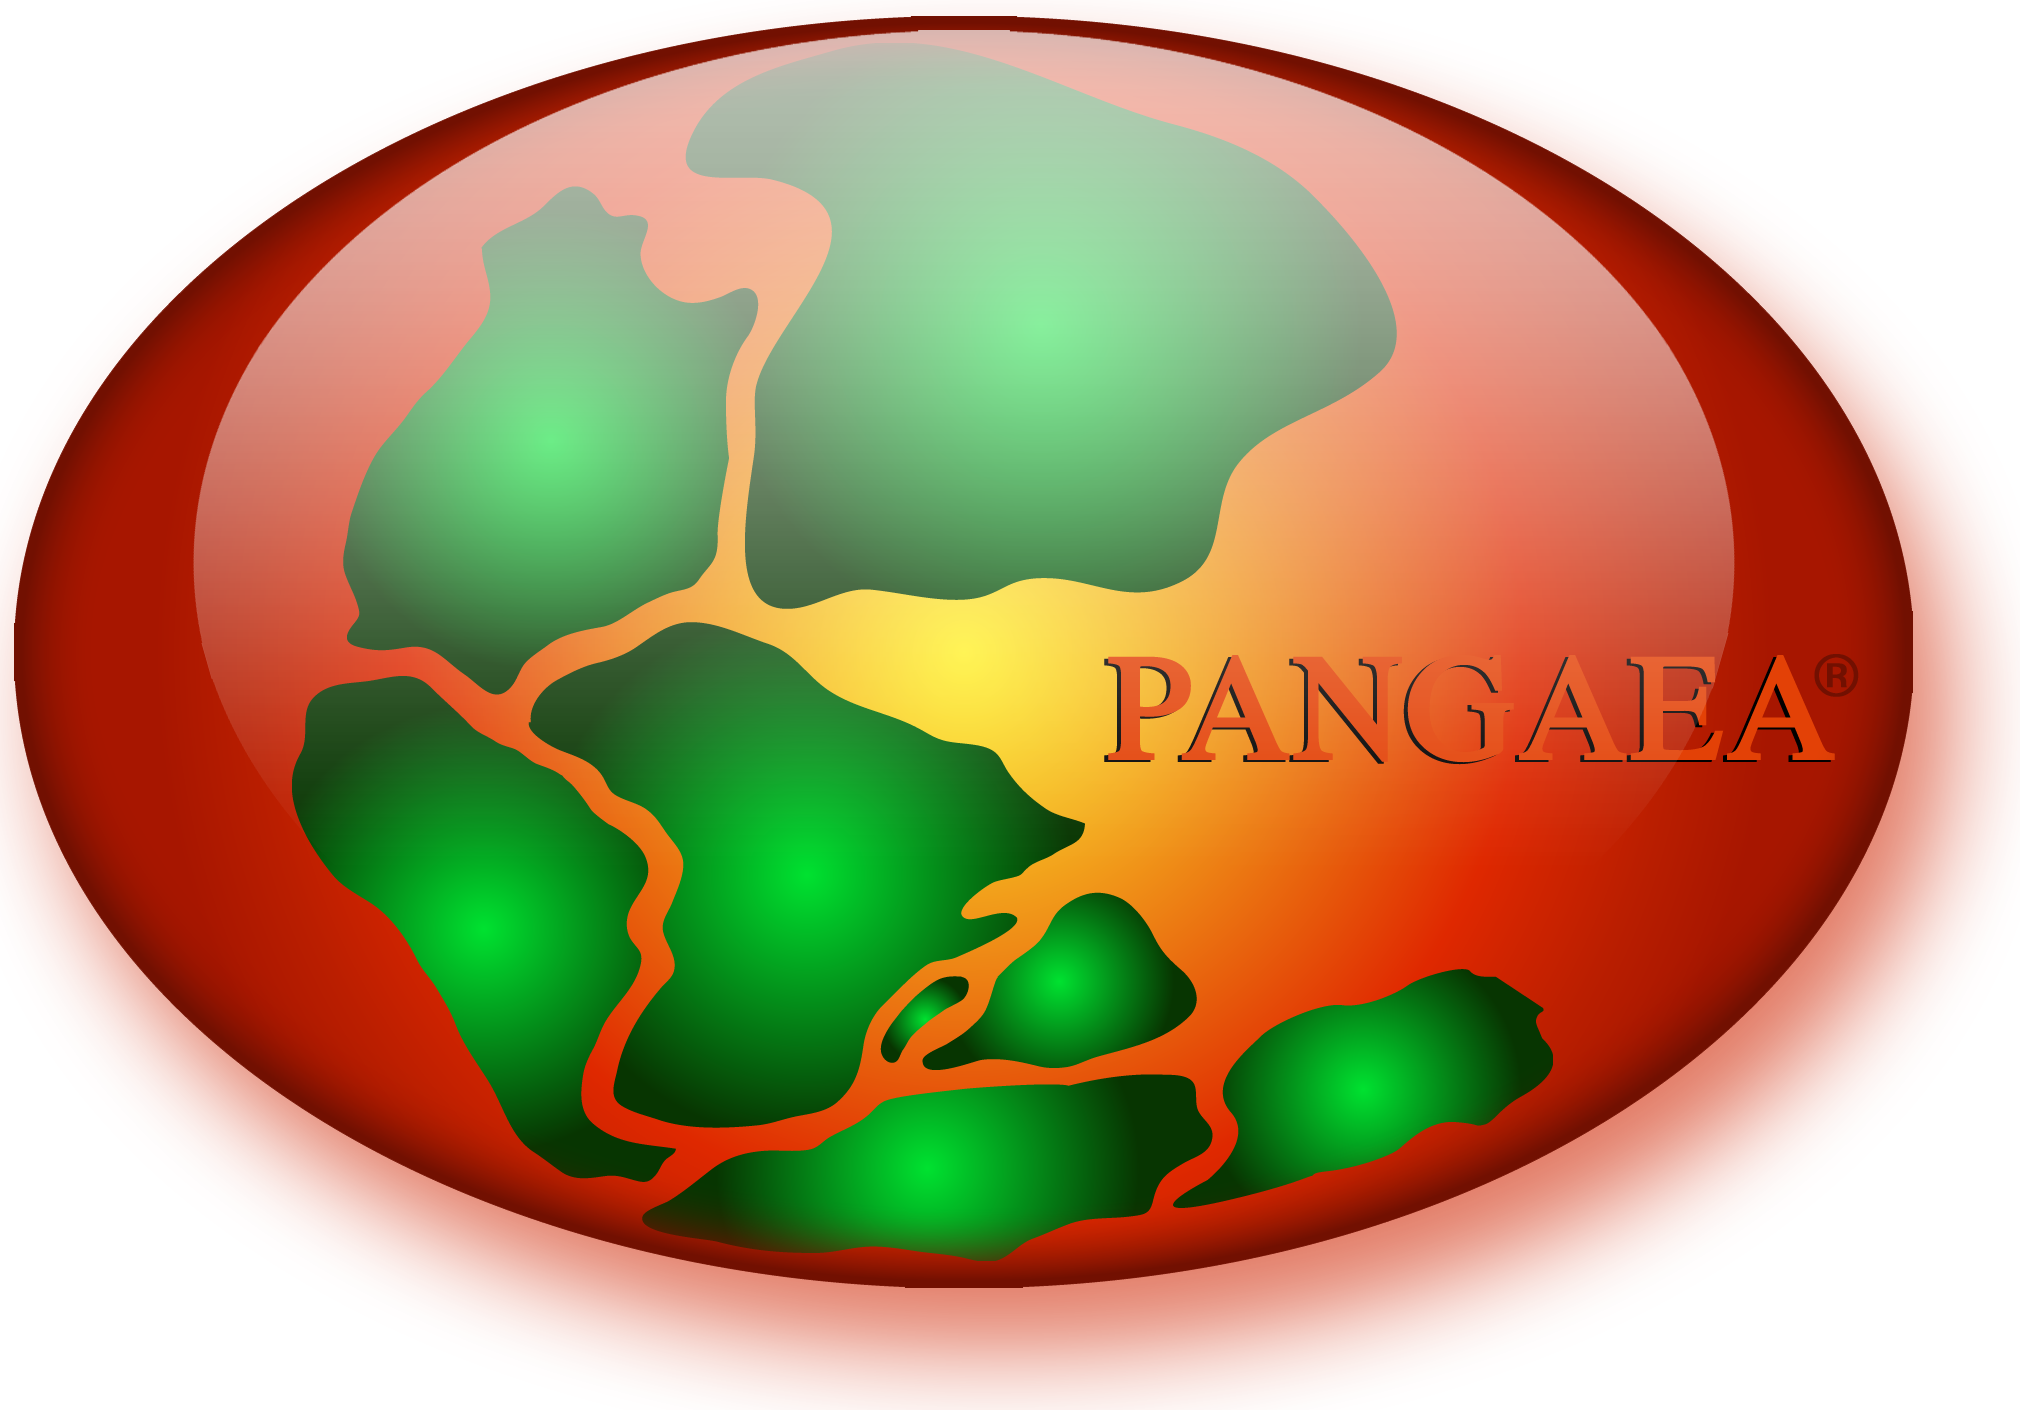 pangaea logo 2020x1410